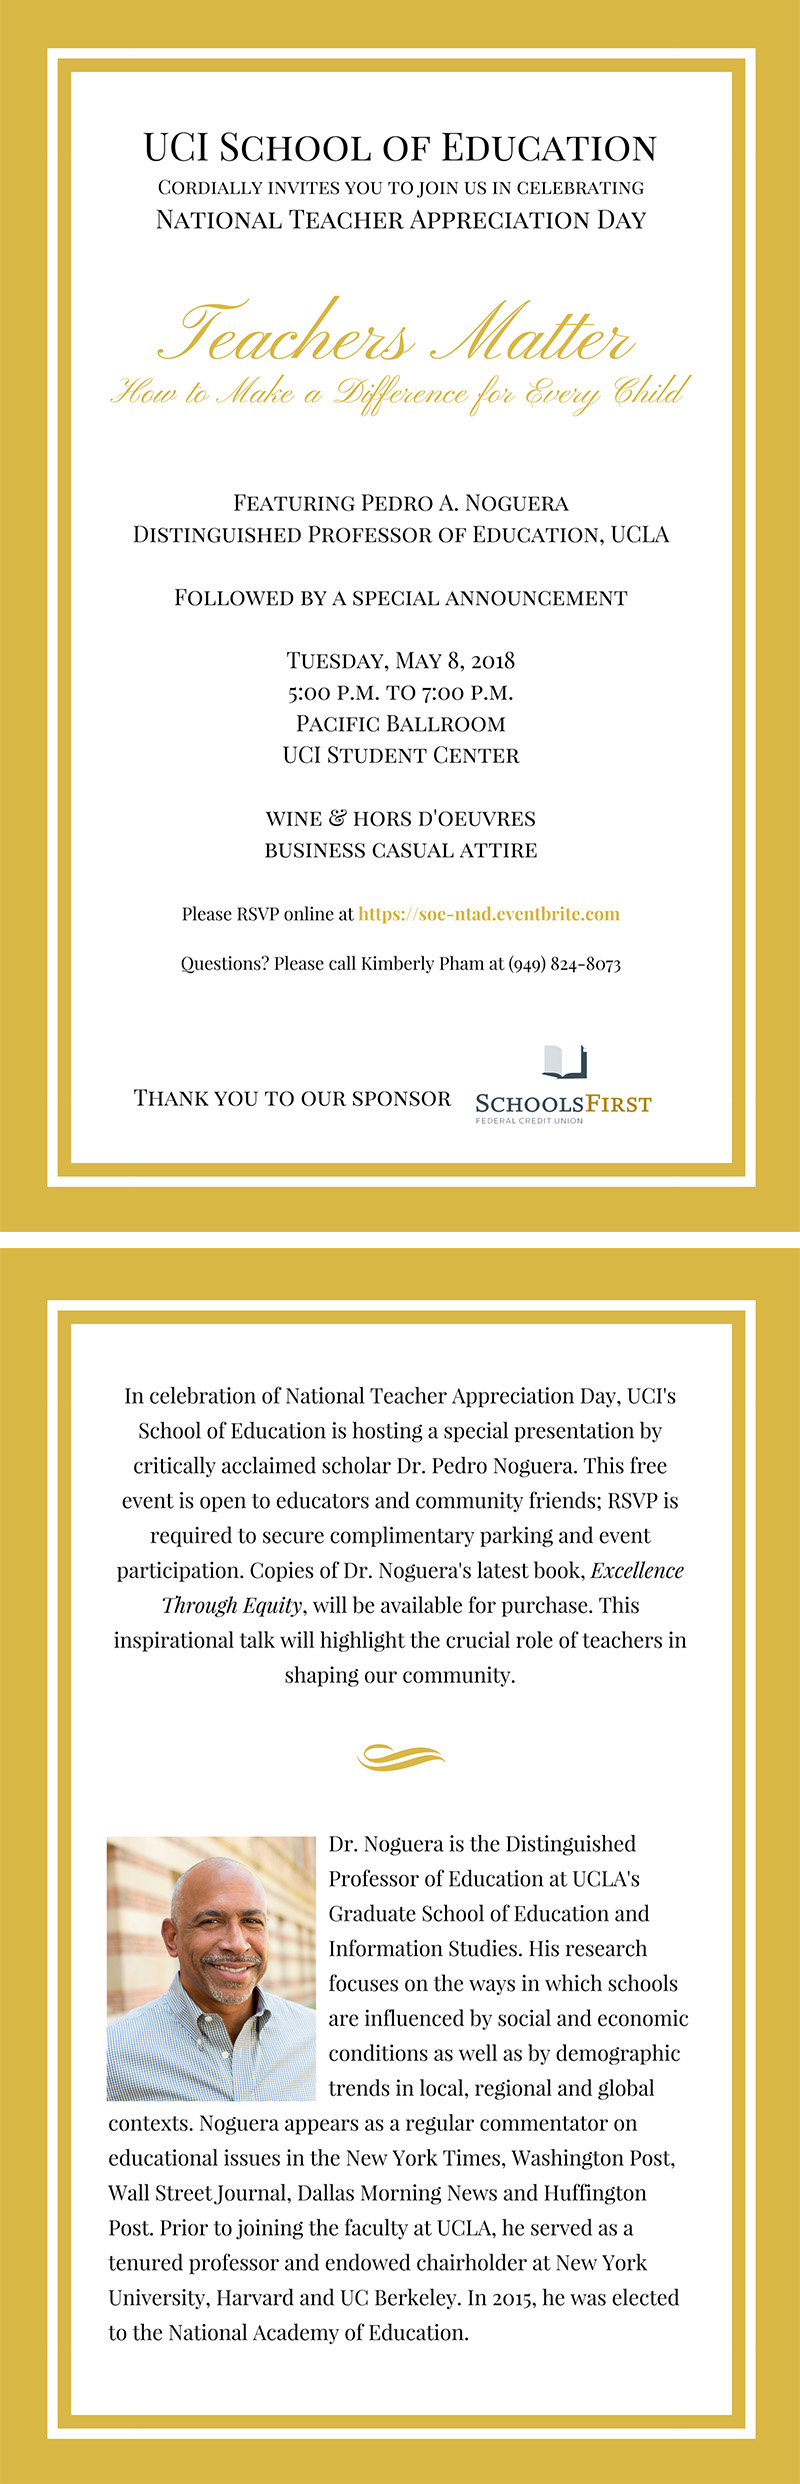 National Teacher Appreciation Day